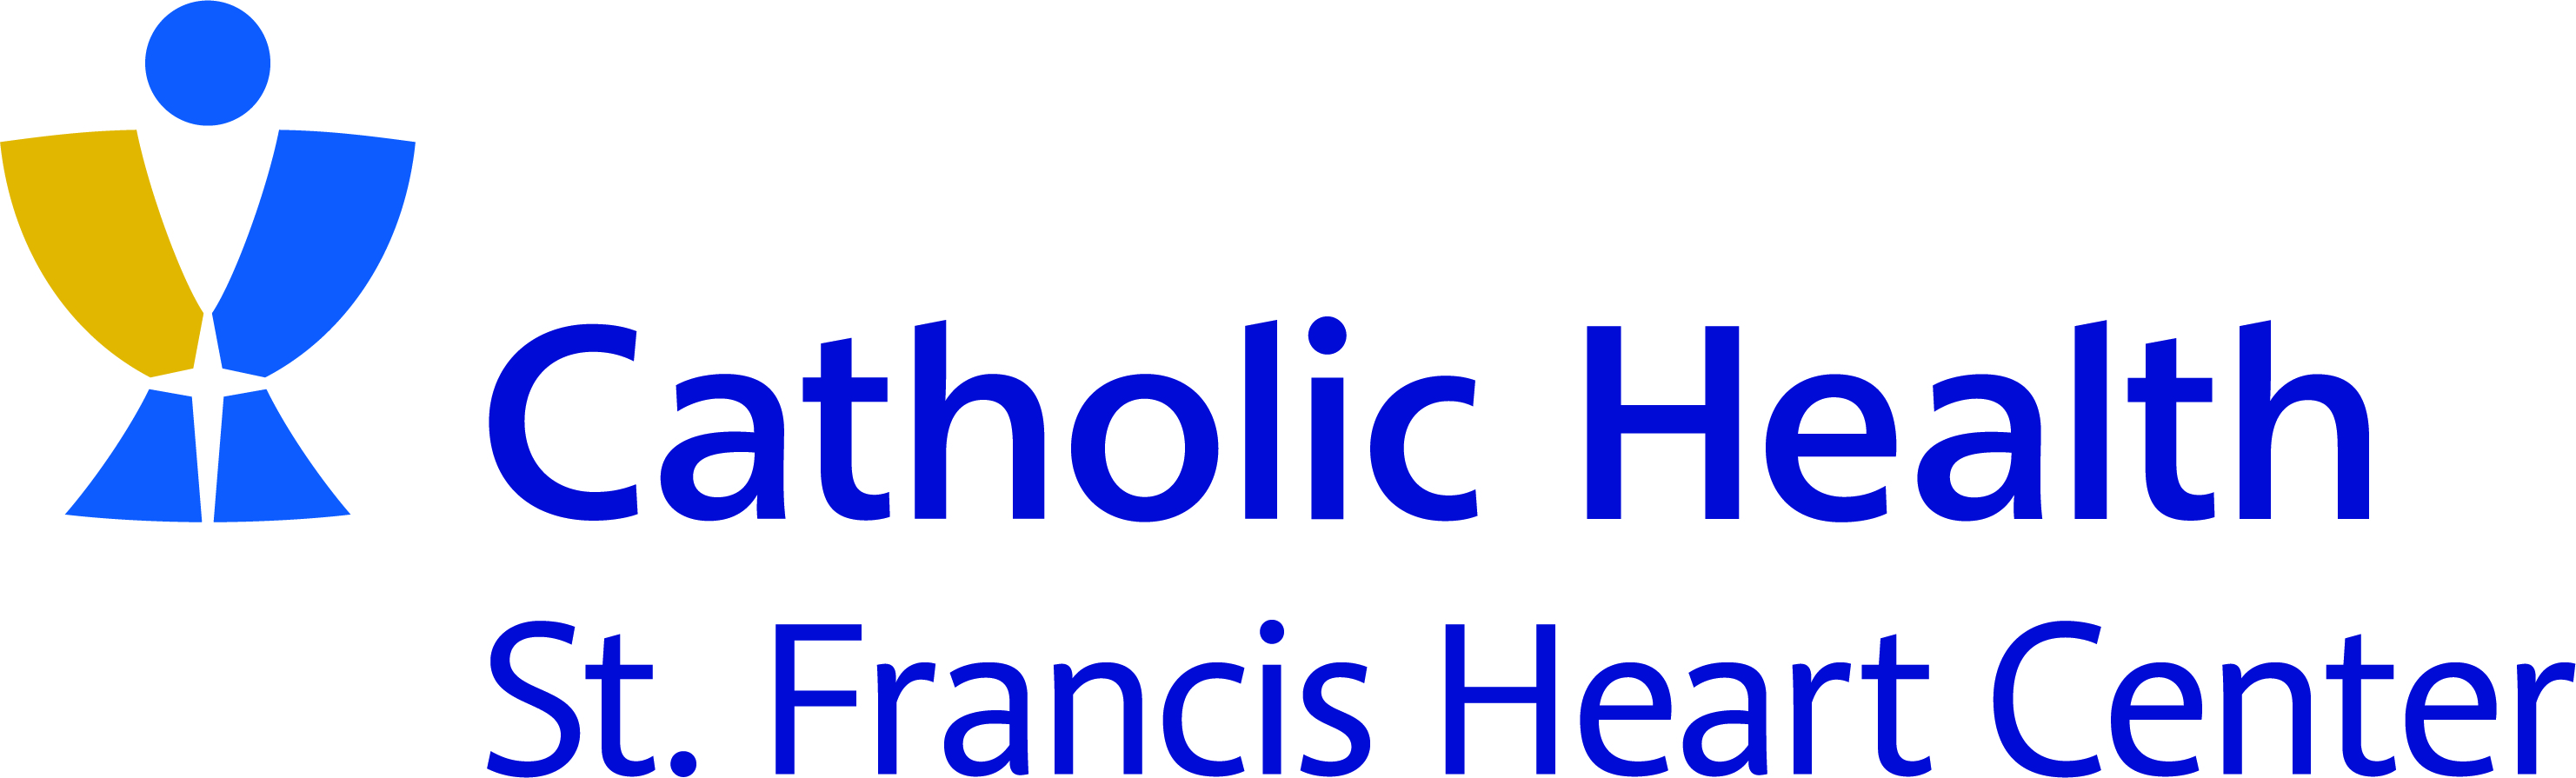 Catholic Health St. Francis Hospital & Heart Center